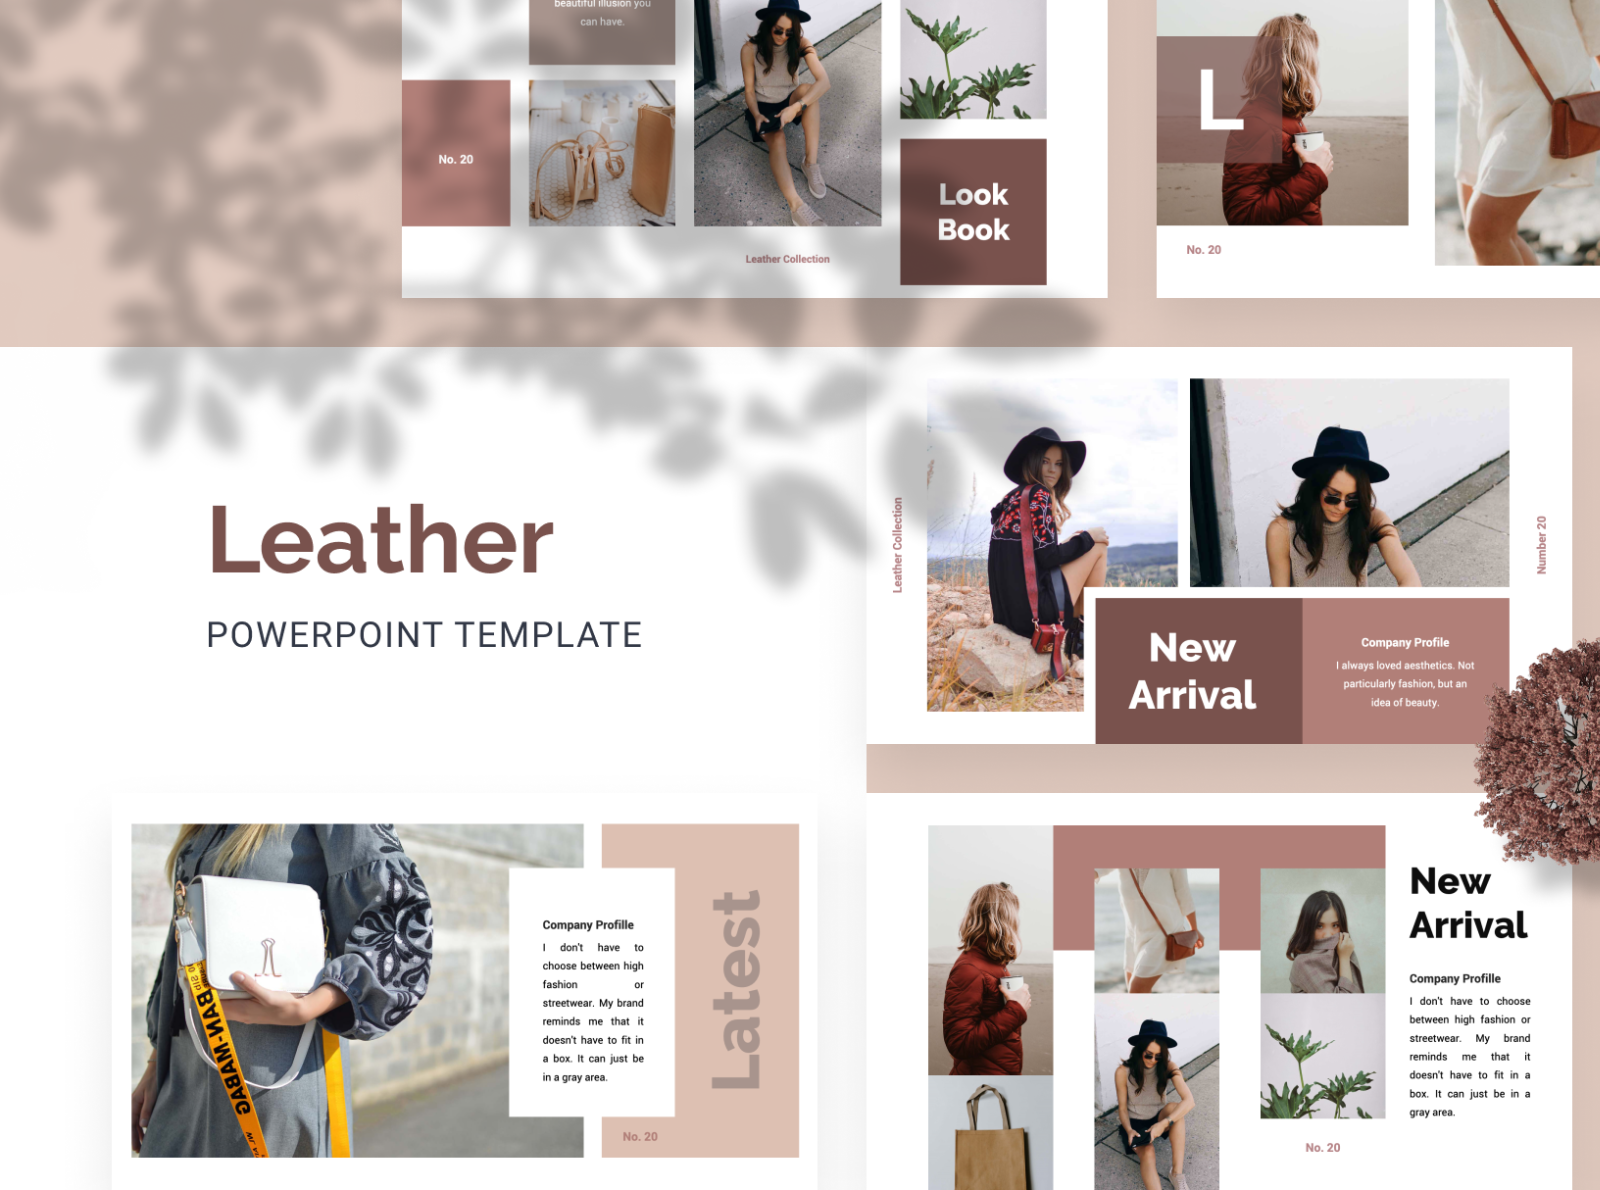 ppt presentation on leather